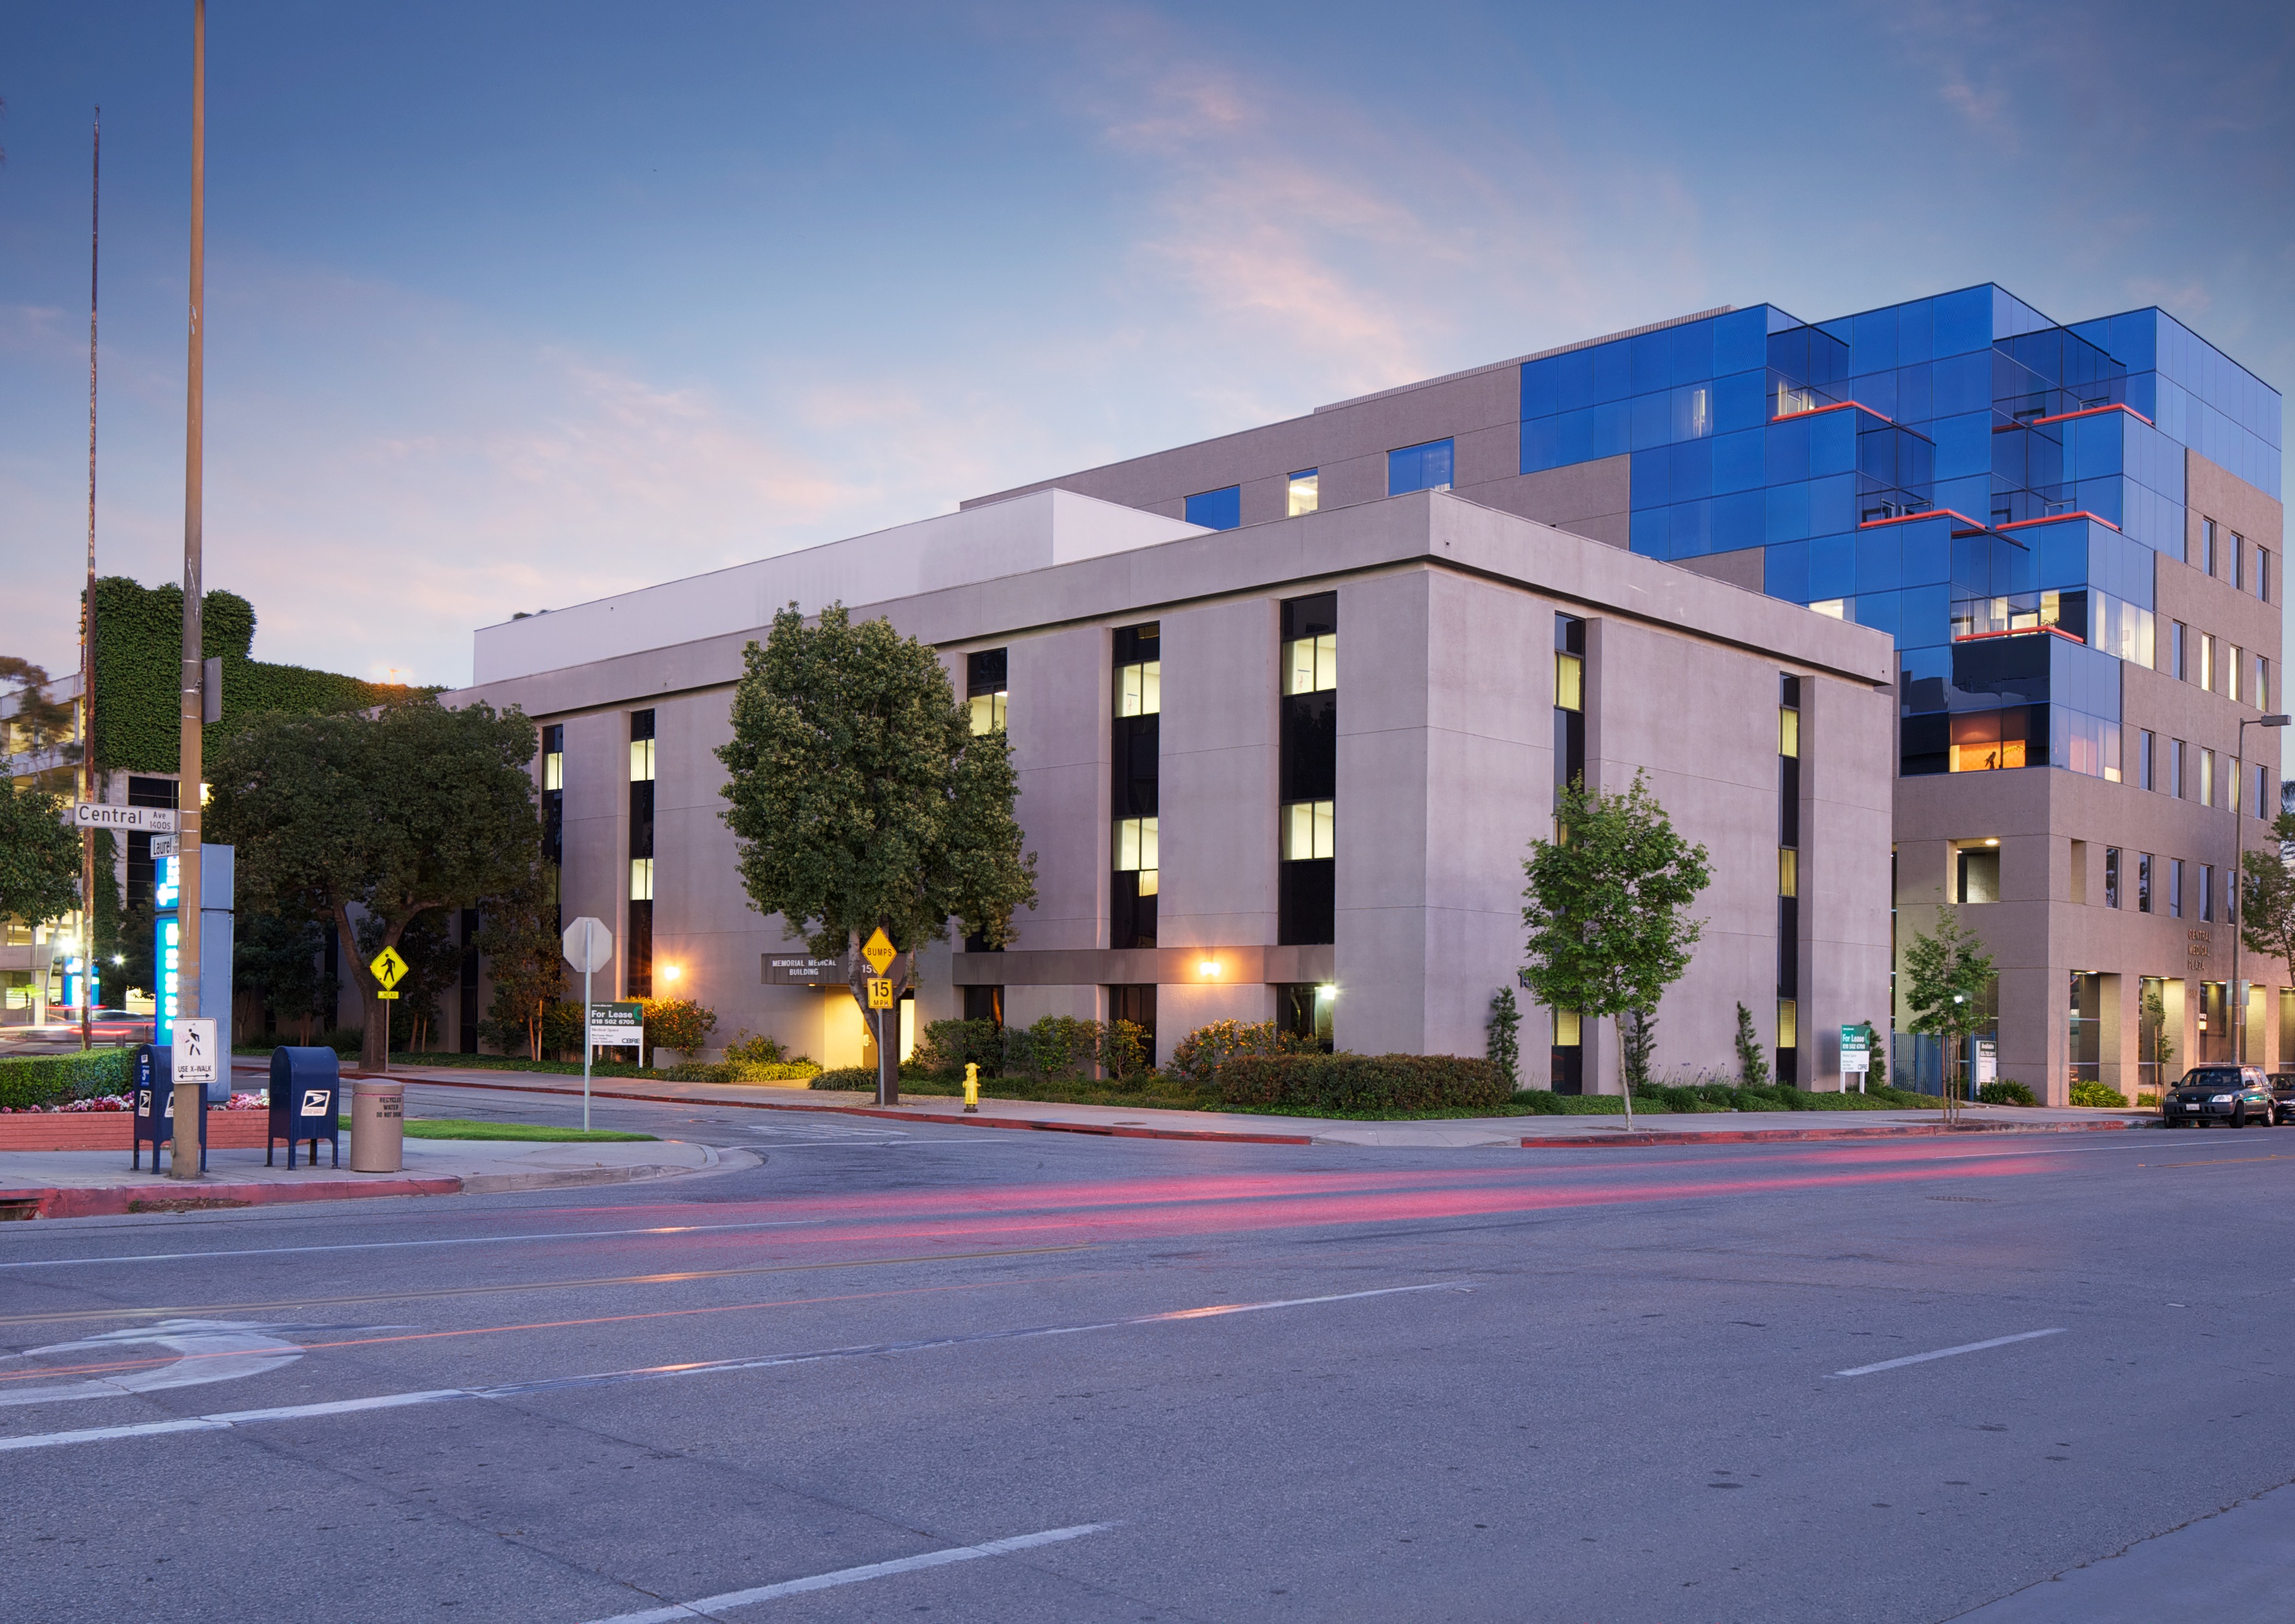 Glendale Memorial Medical Office Building, Glendale, Calif.